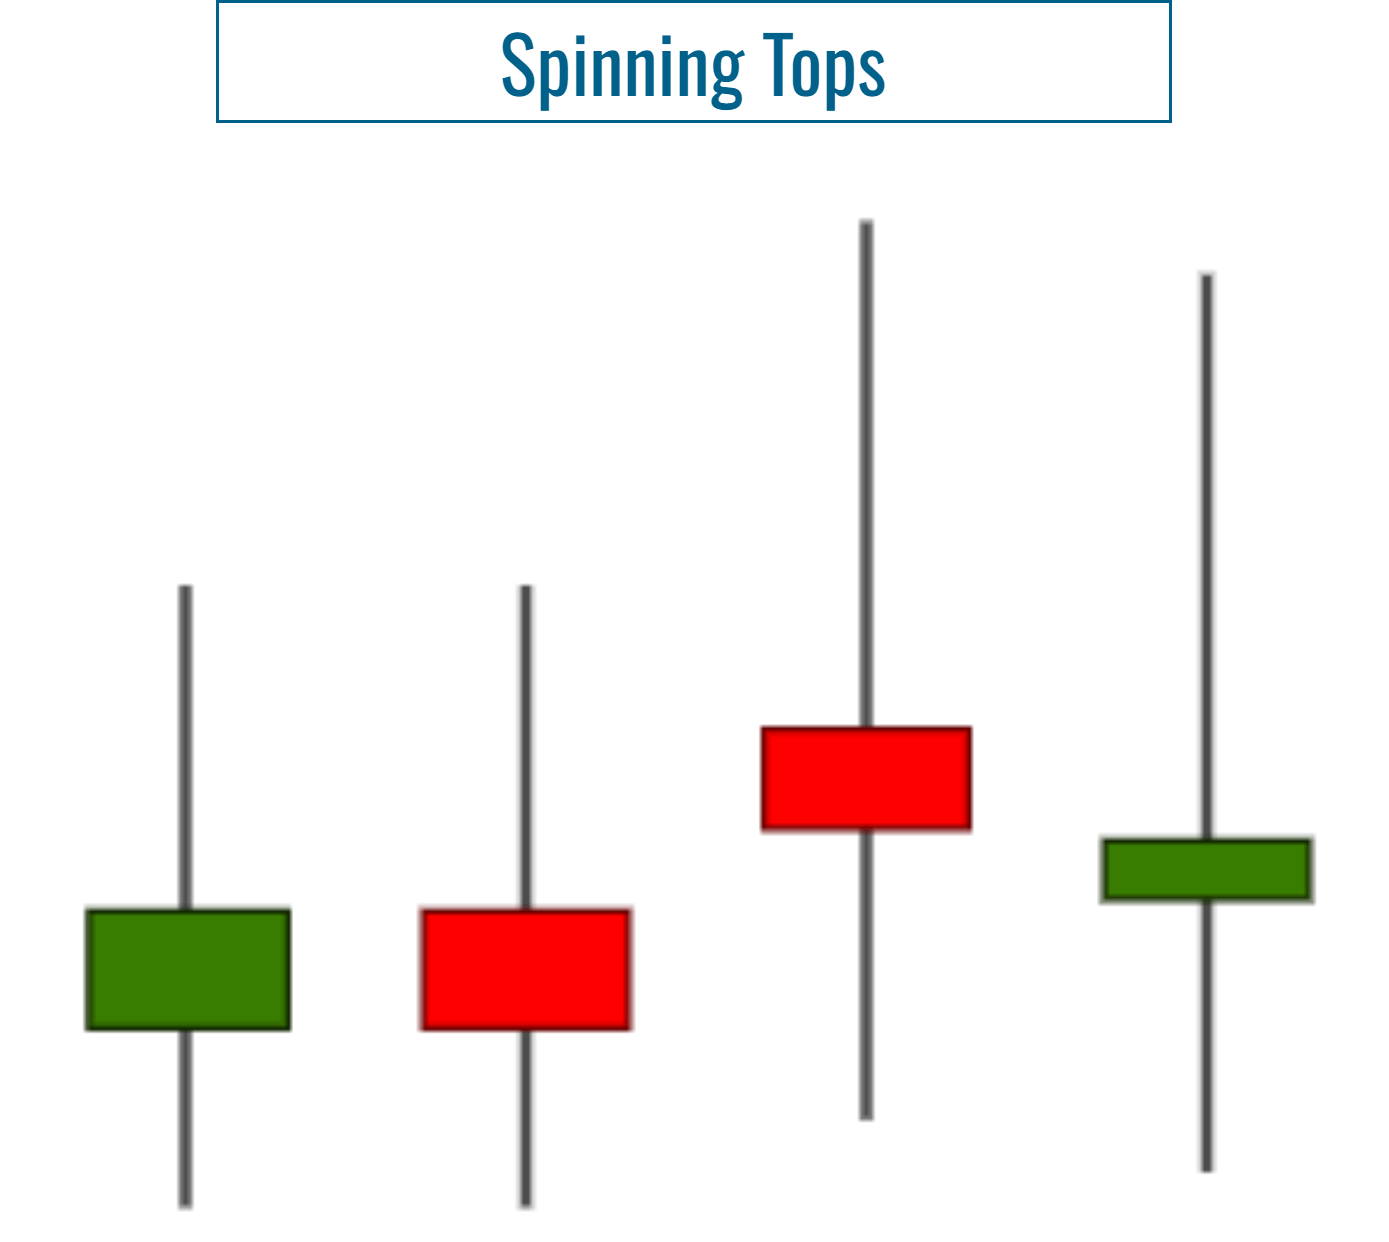 Doji vs. Spinning Top